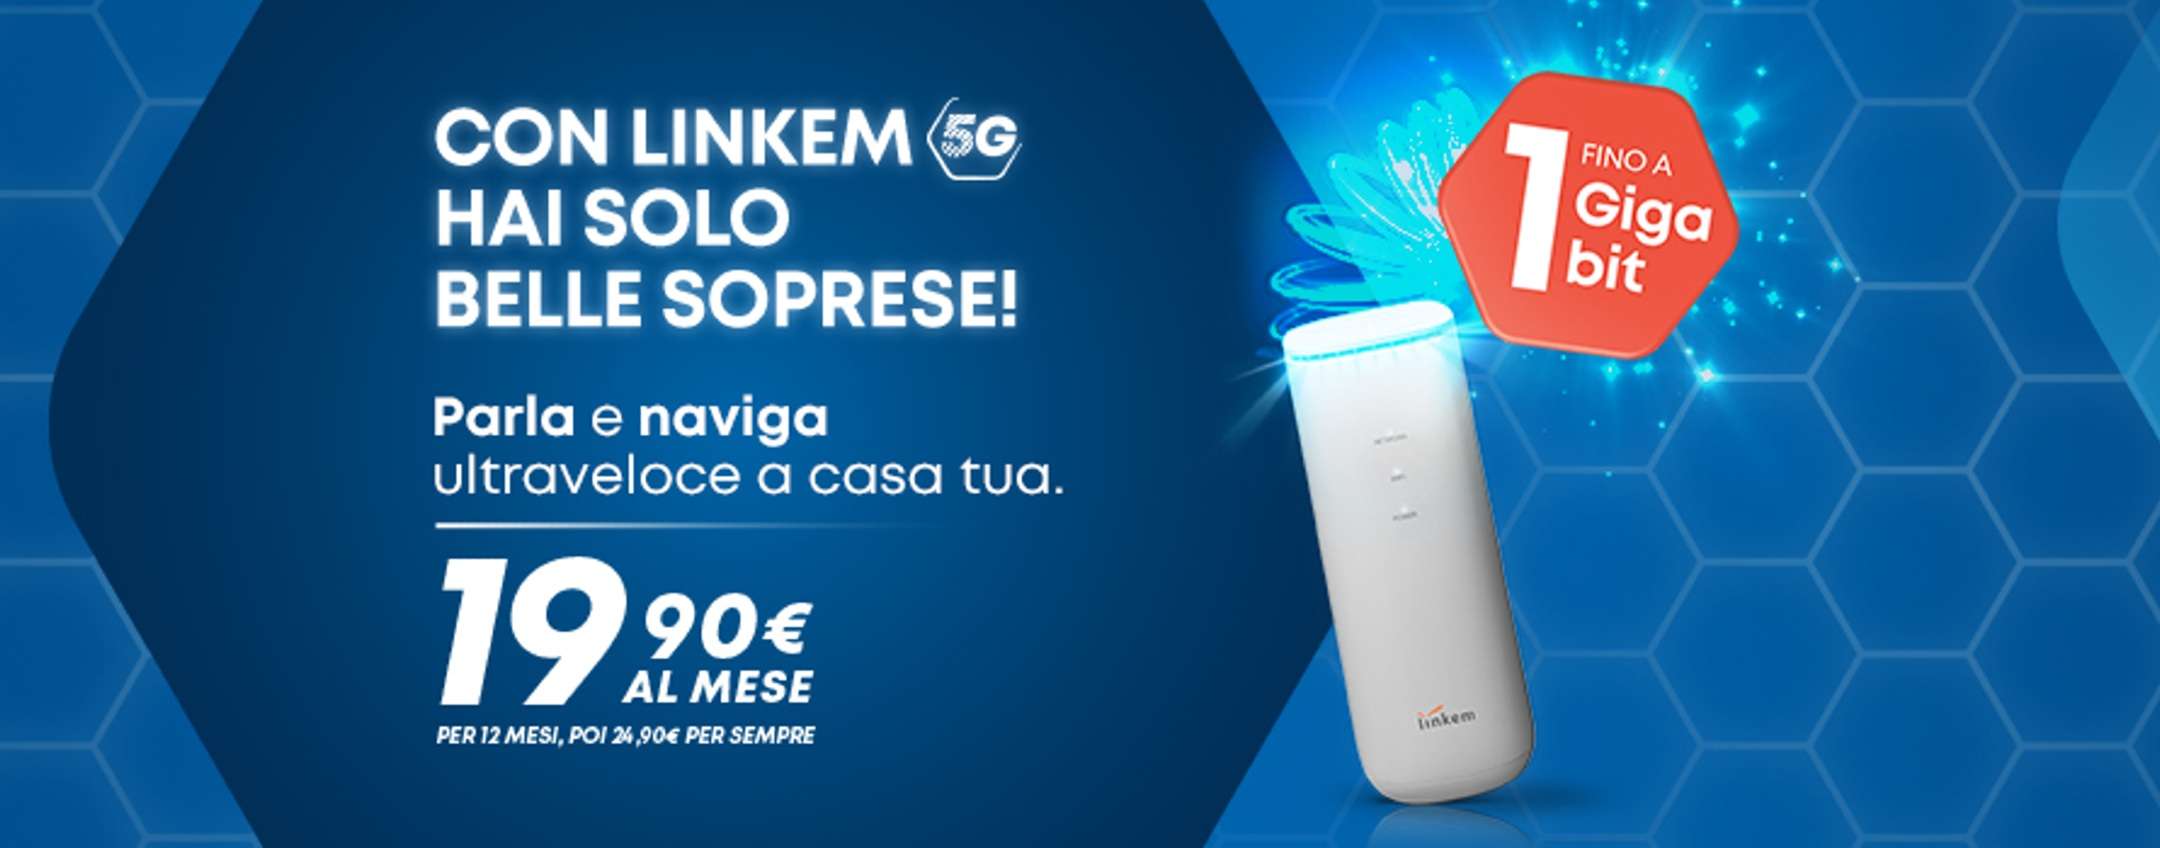 Linkem 5G Promo Easy: 19,90€ anche ad Agosto